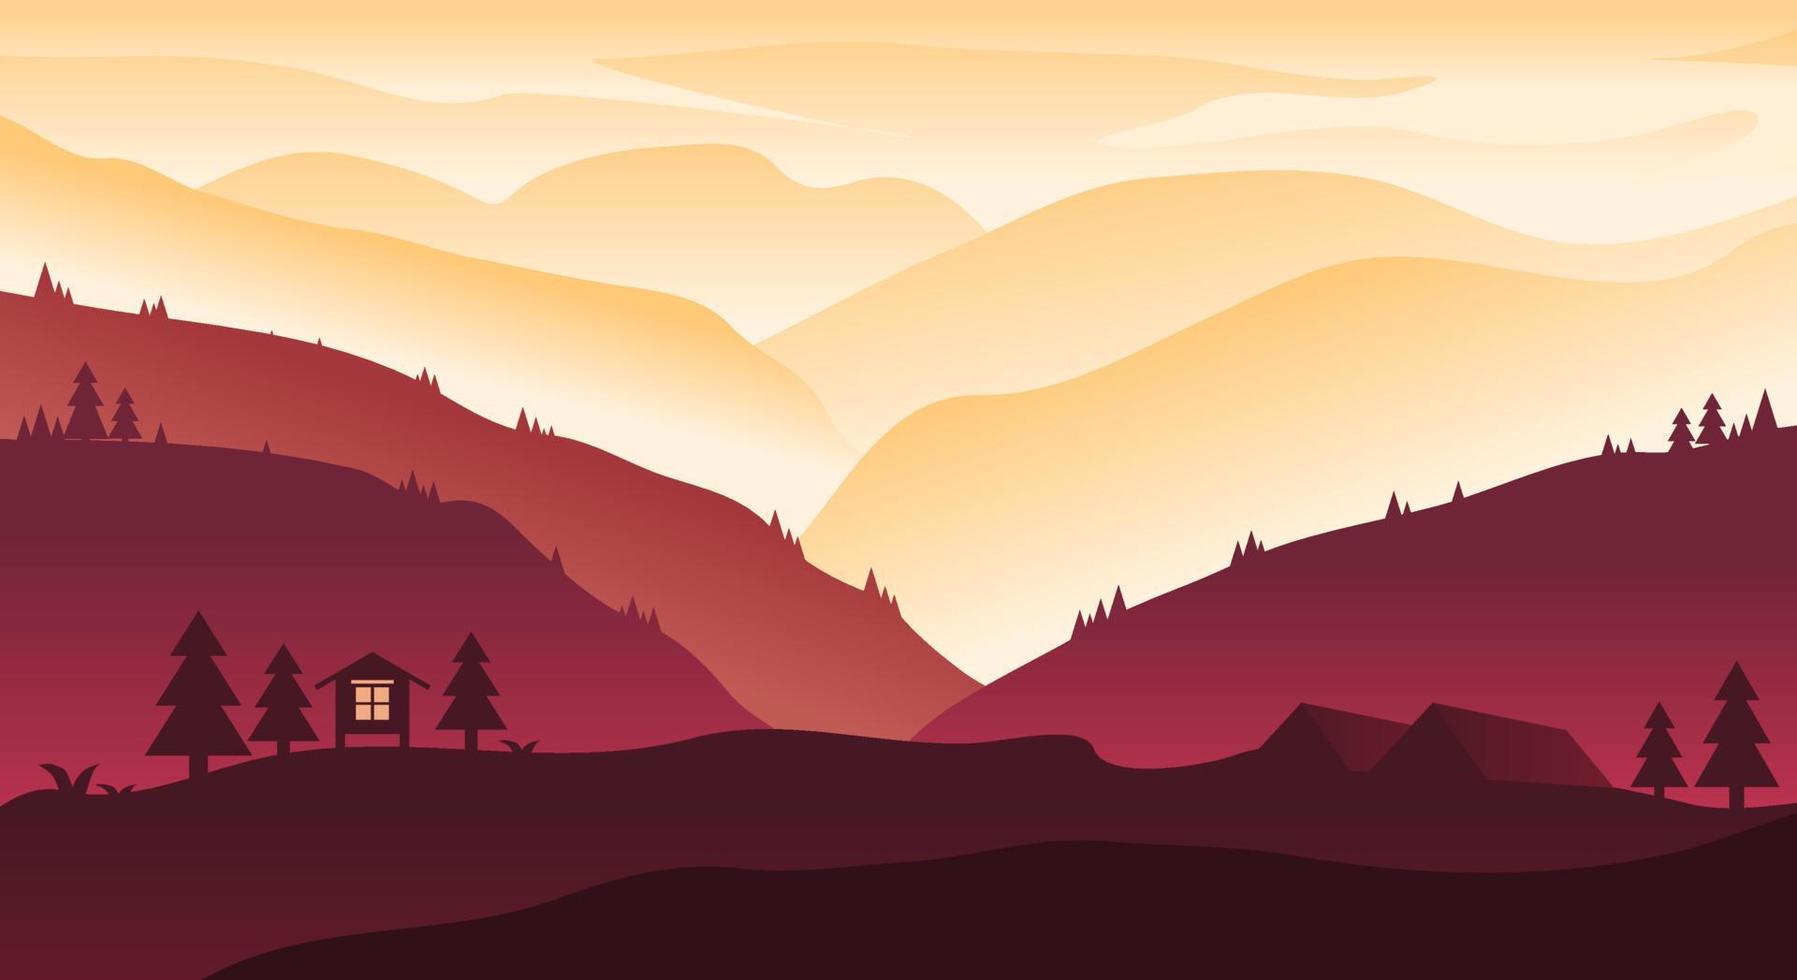 Evening mountain landscape background vector